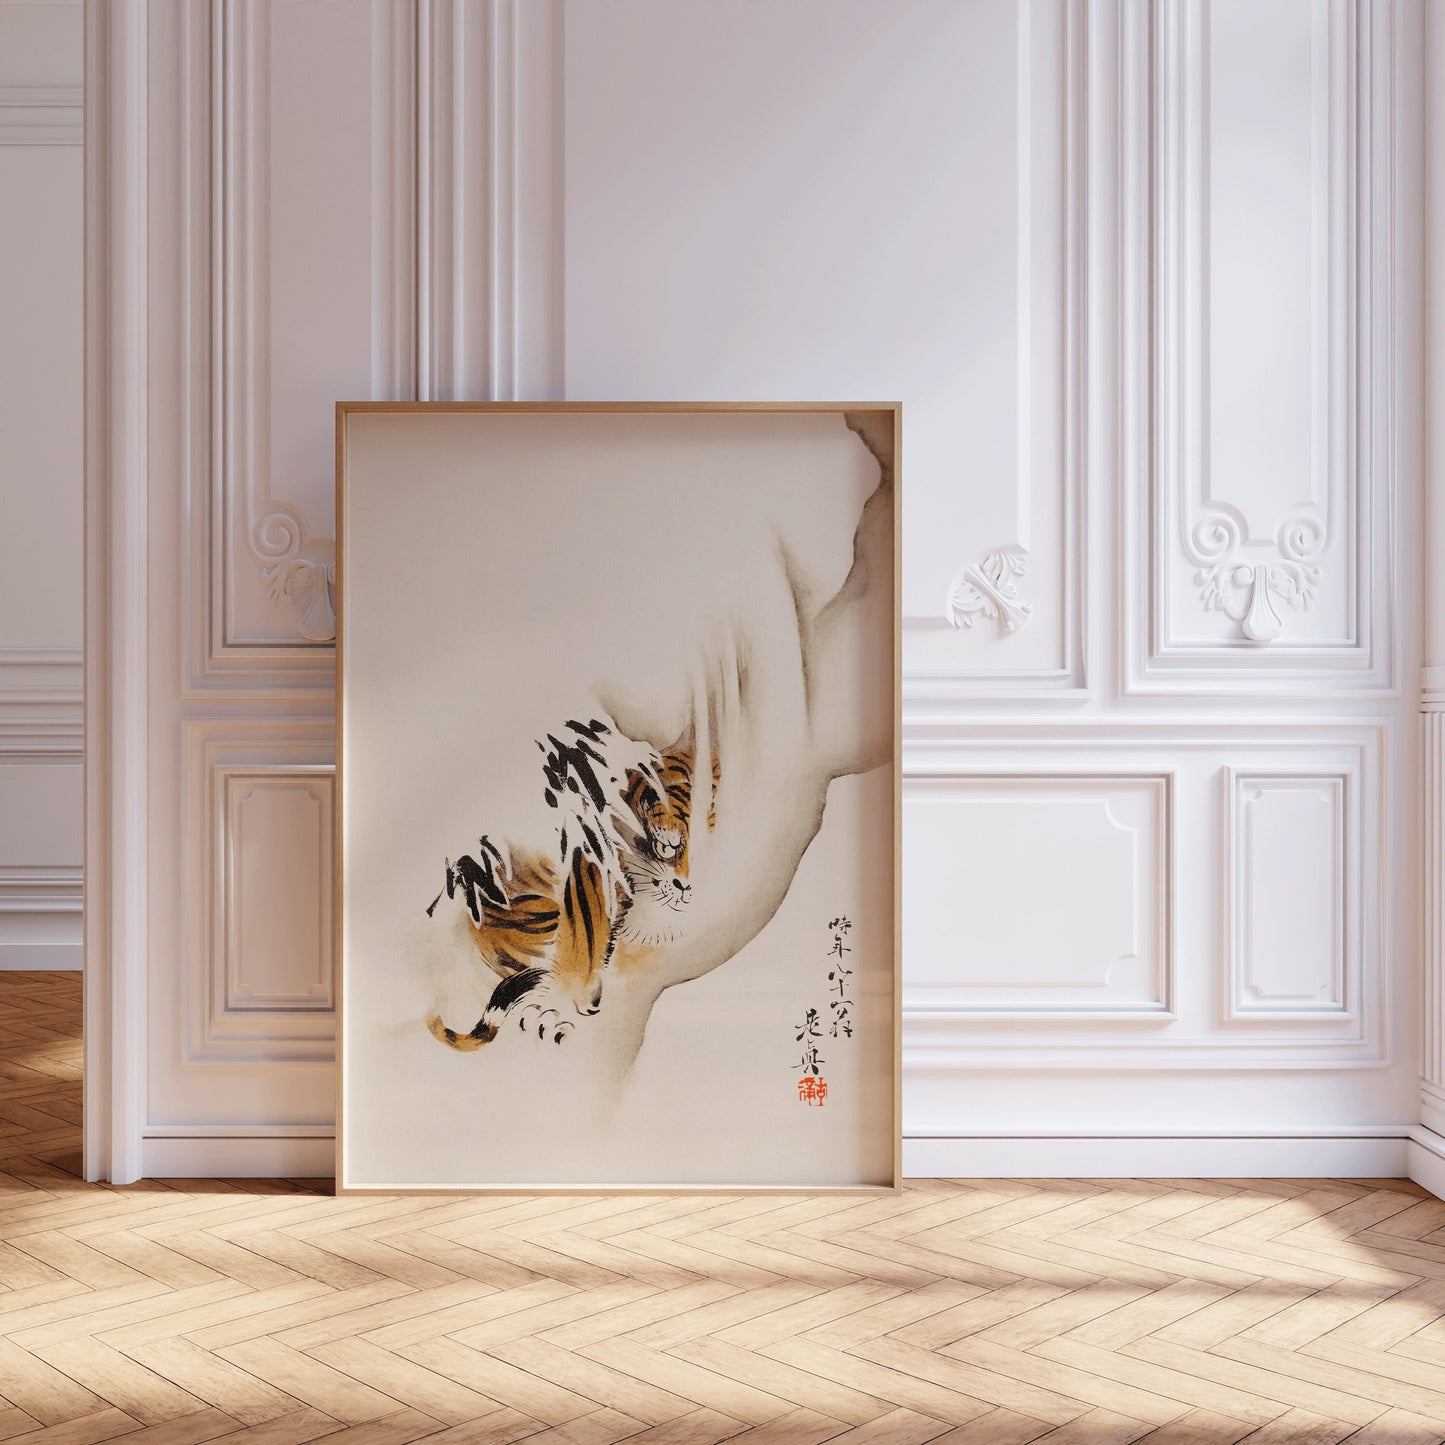 Shibata Zeshin - Tiger | Vintage Japanese Woodblock Art (available framed ready to hang or unframed)